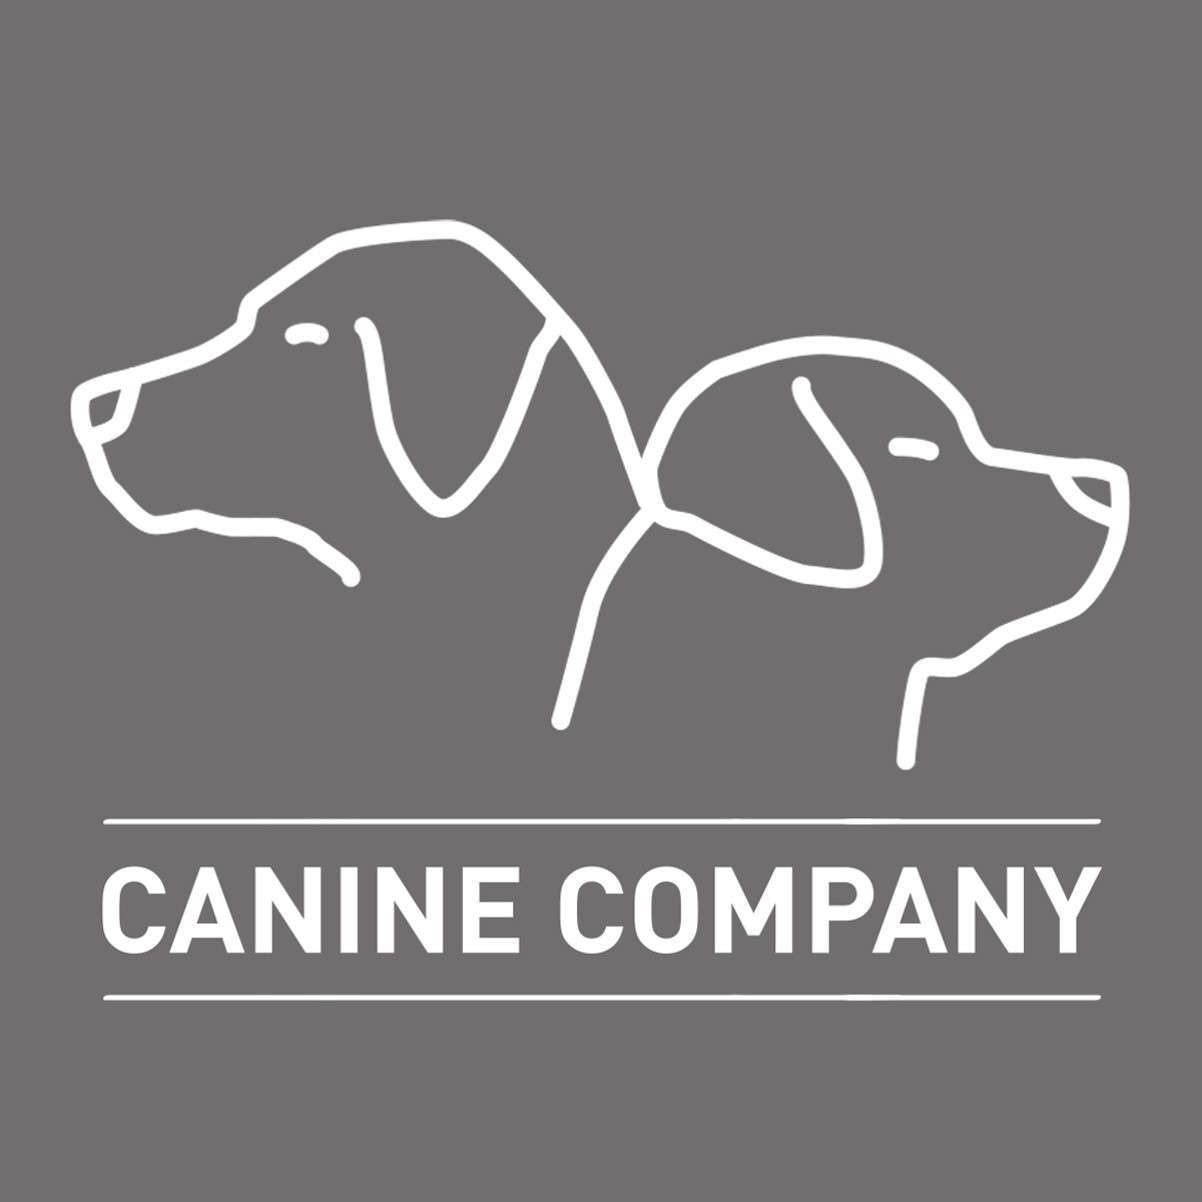 Canine Company Franchise | Quality Franchise Association